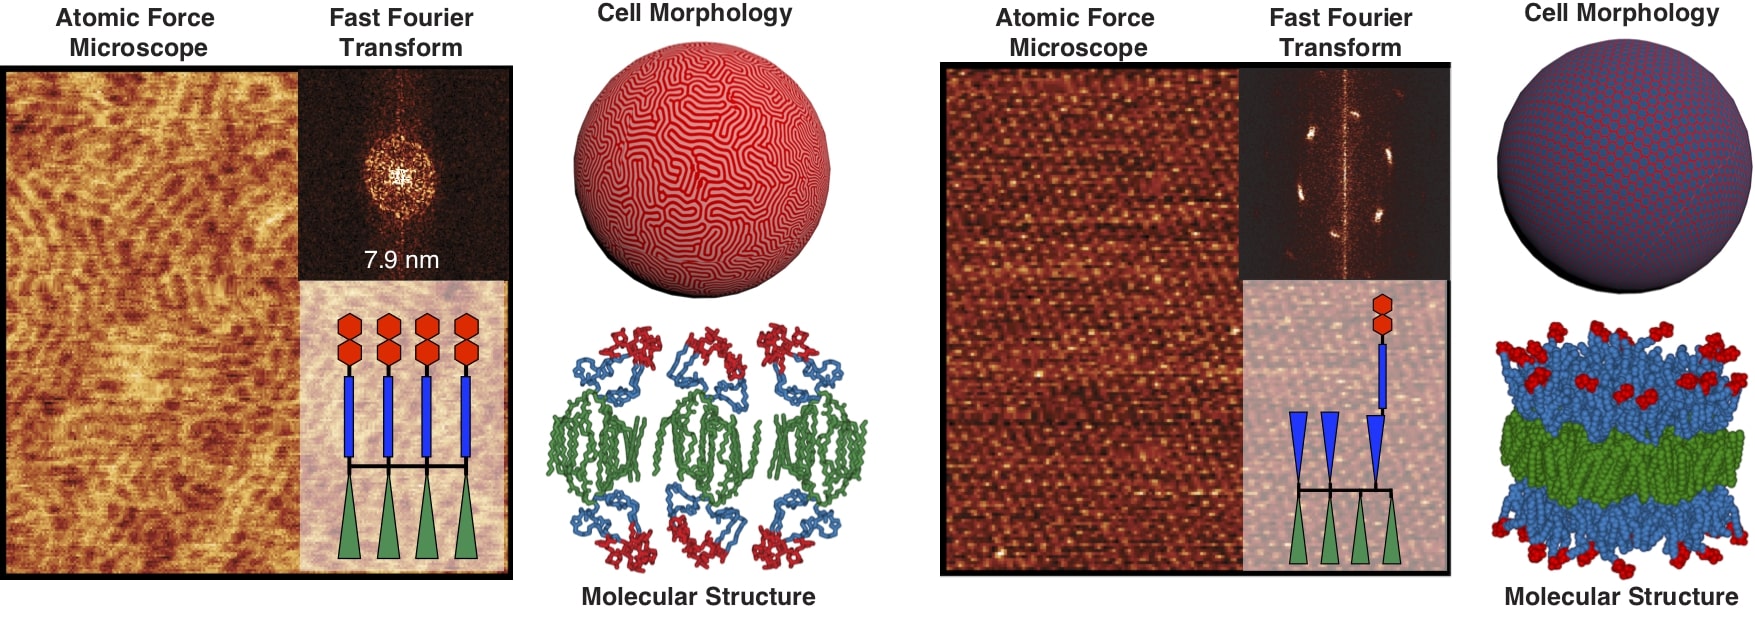 Cell morphology illustration